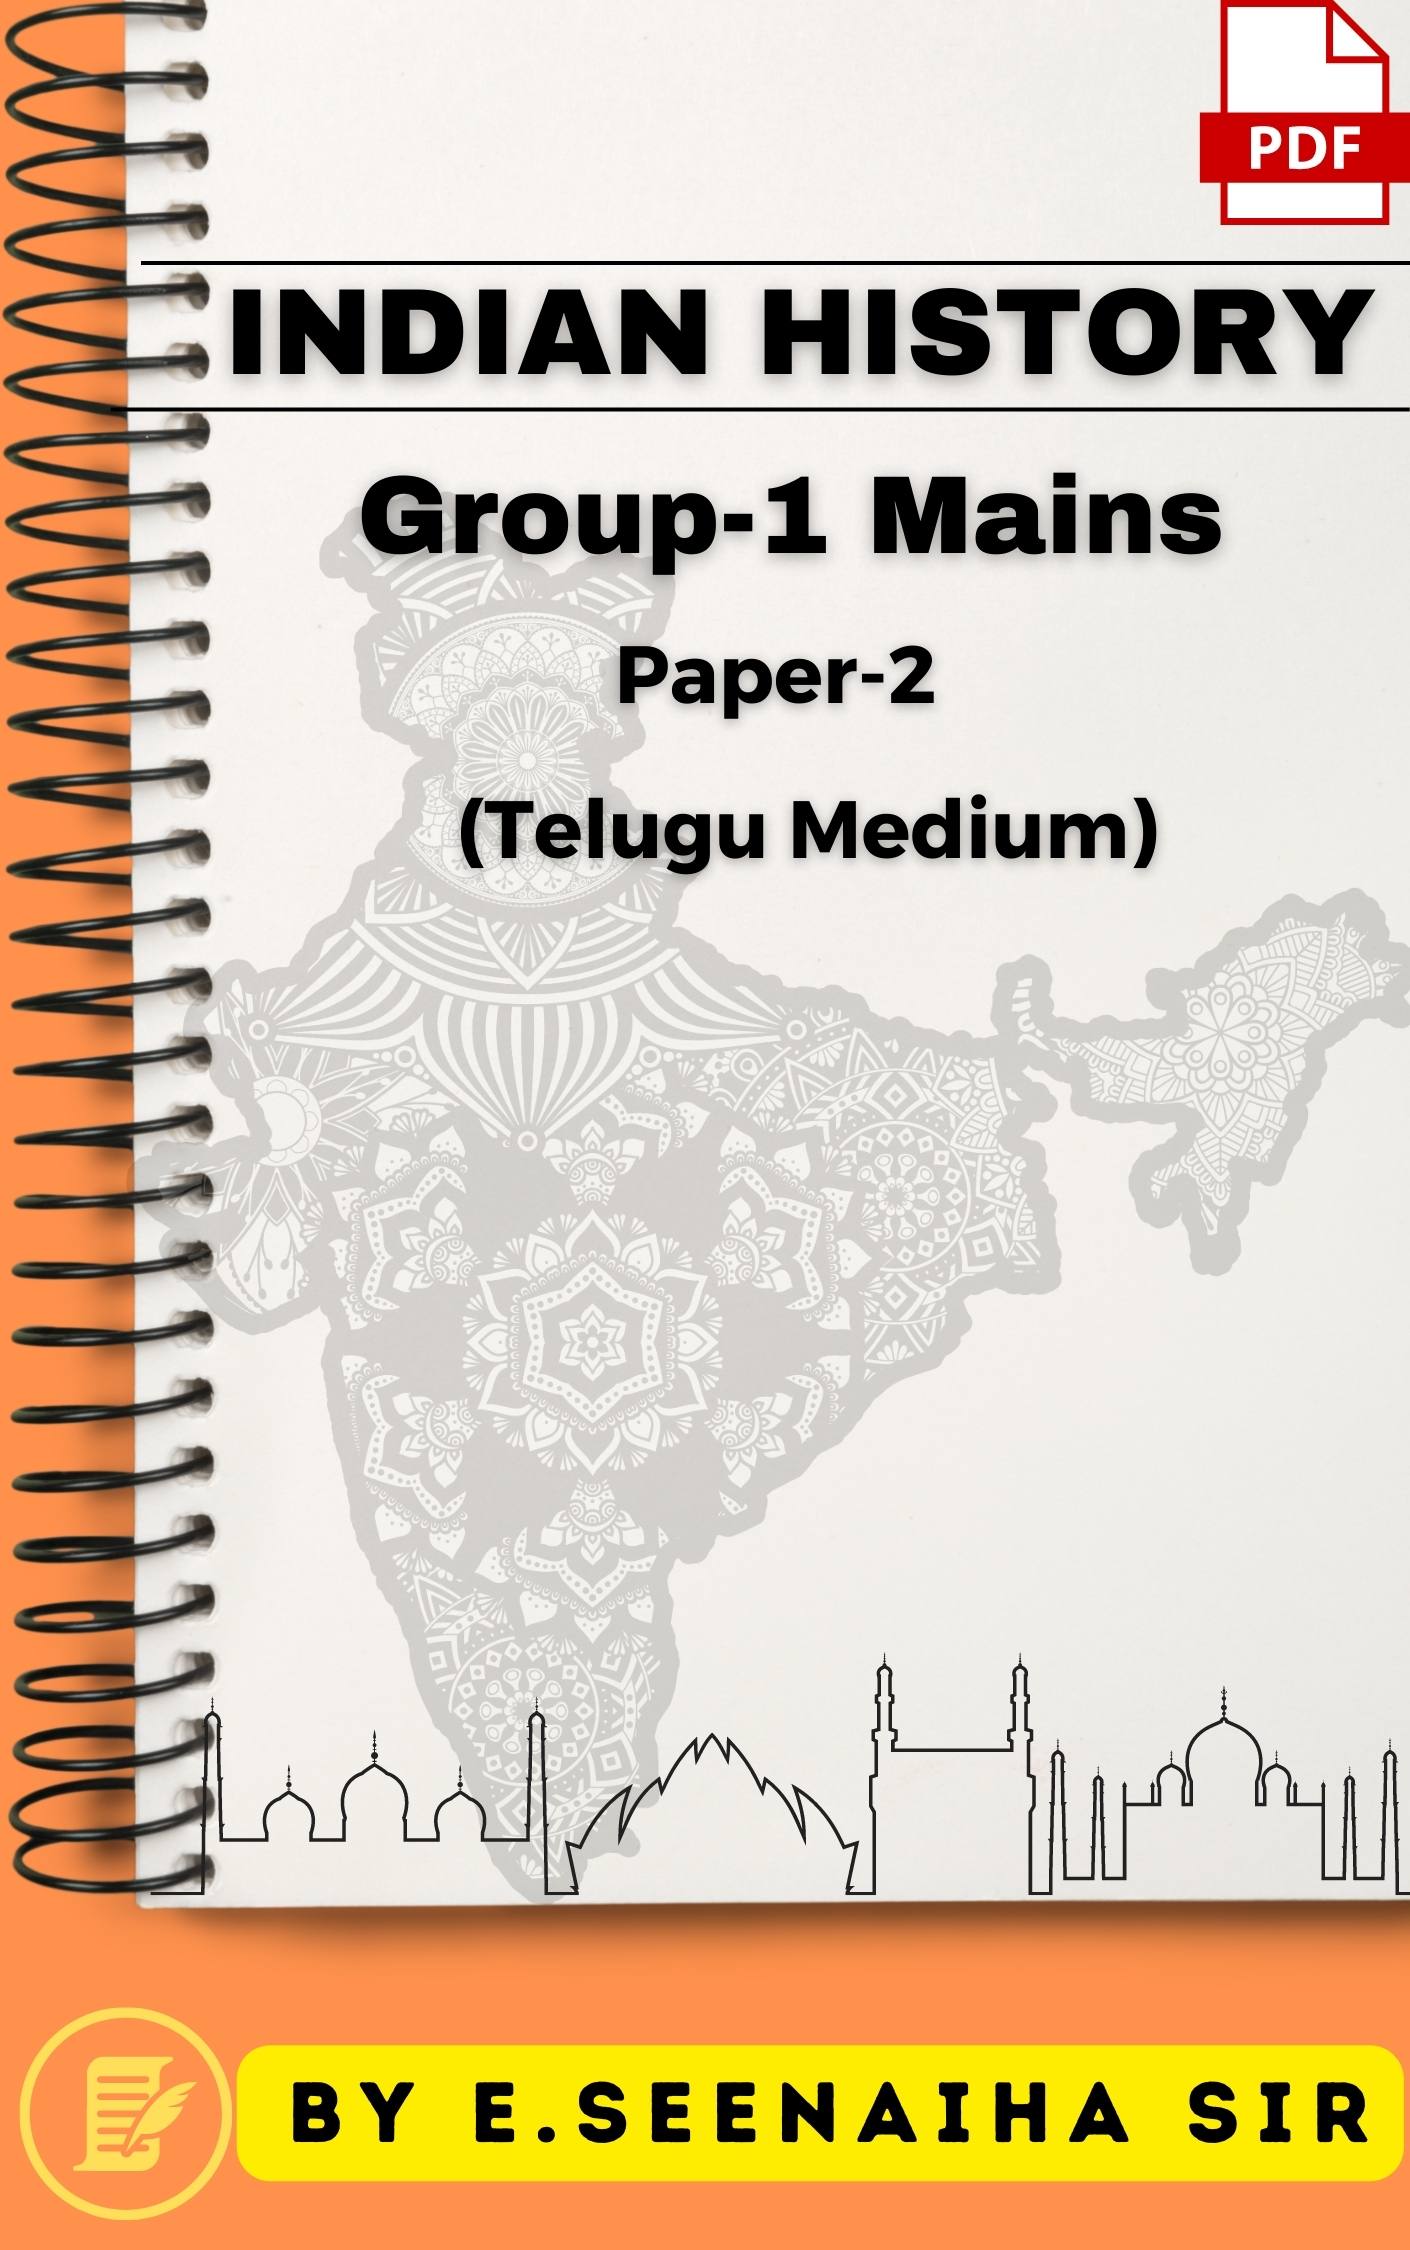 Indian History for Group-1 (Mains) Paper-2 by E.Seenaitha (Handwritten Class Notes - Telugu Medium)